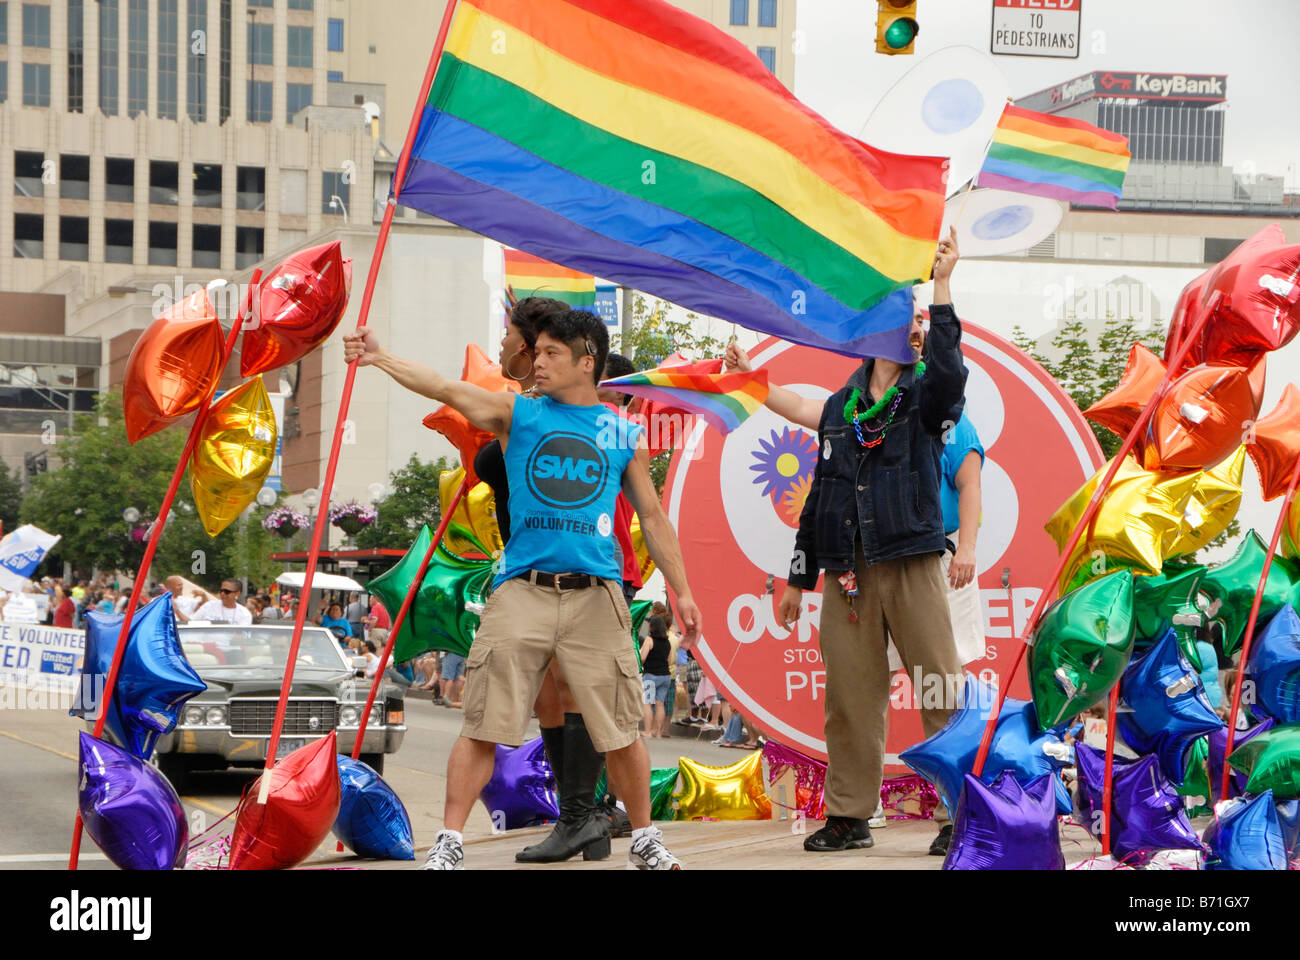 columbus gay pride parade 2021